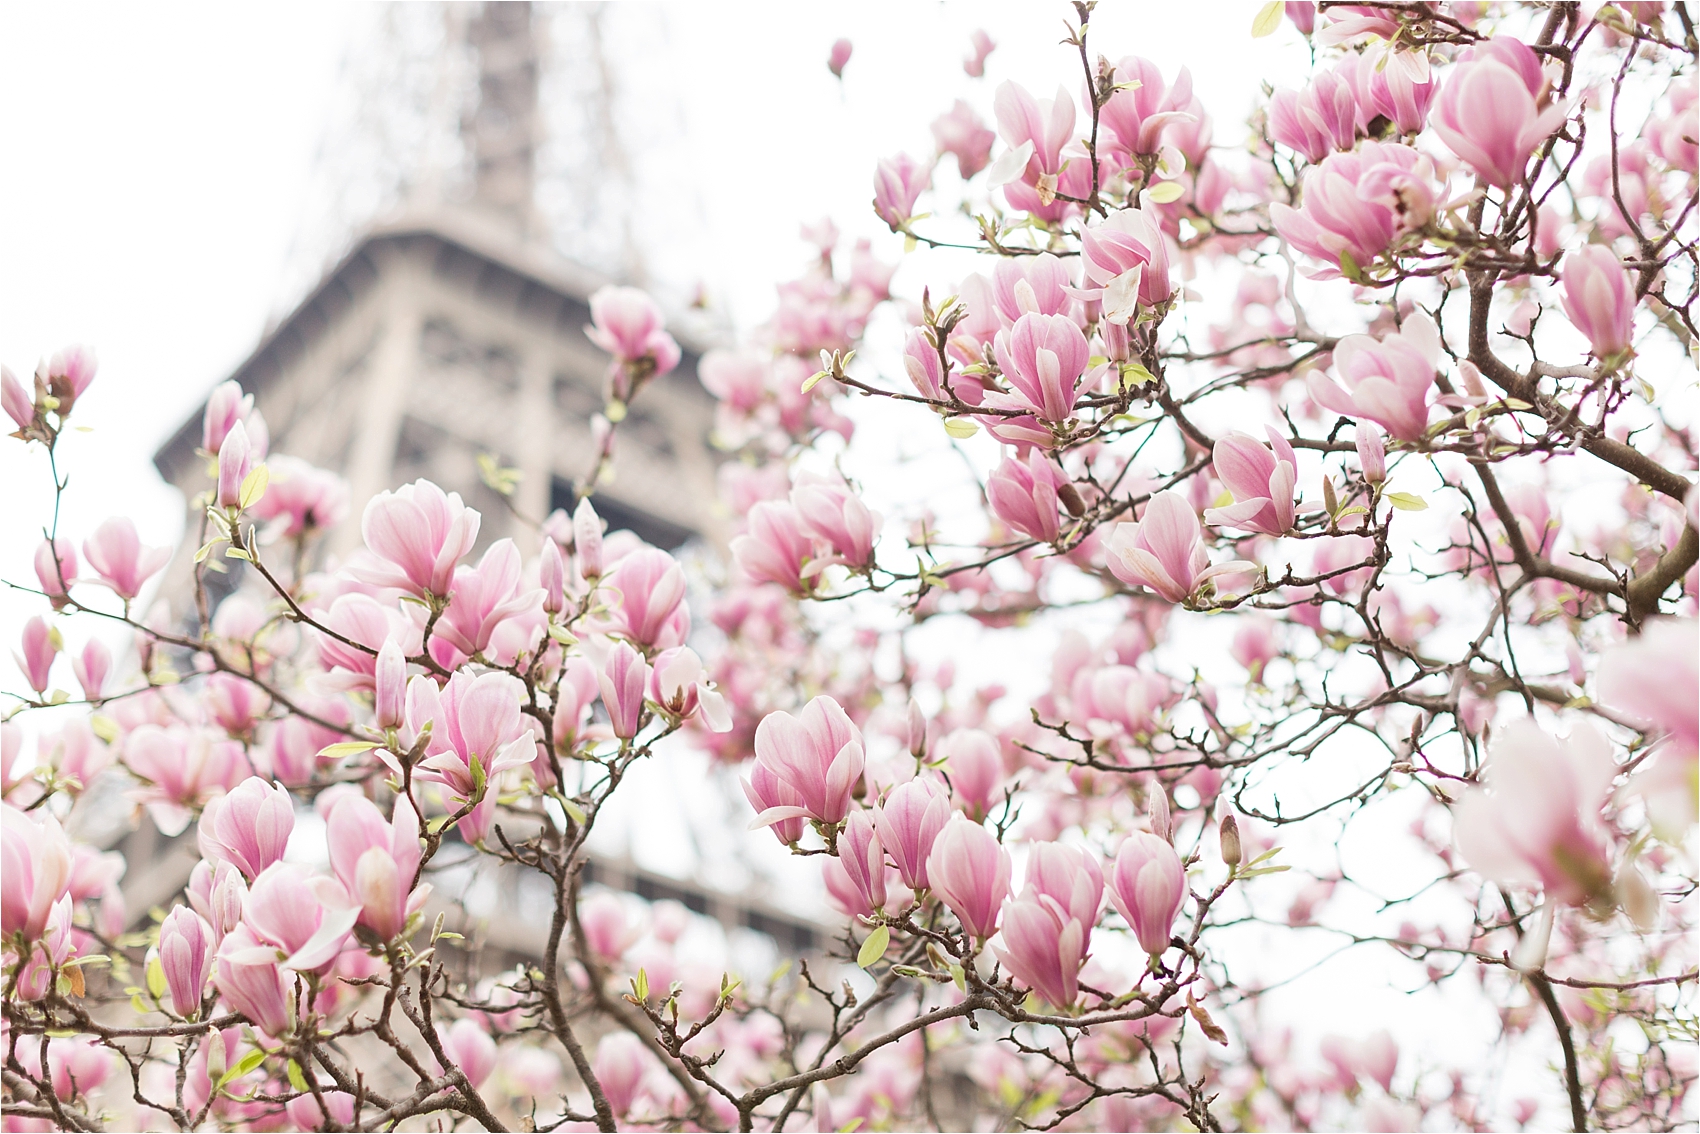 Eiffel with Cherry Blossom Magnolia Trees in Paris